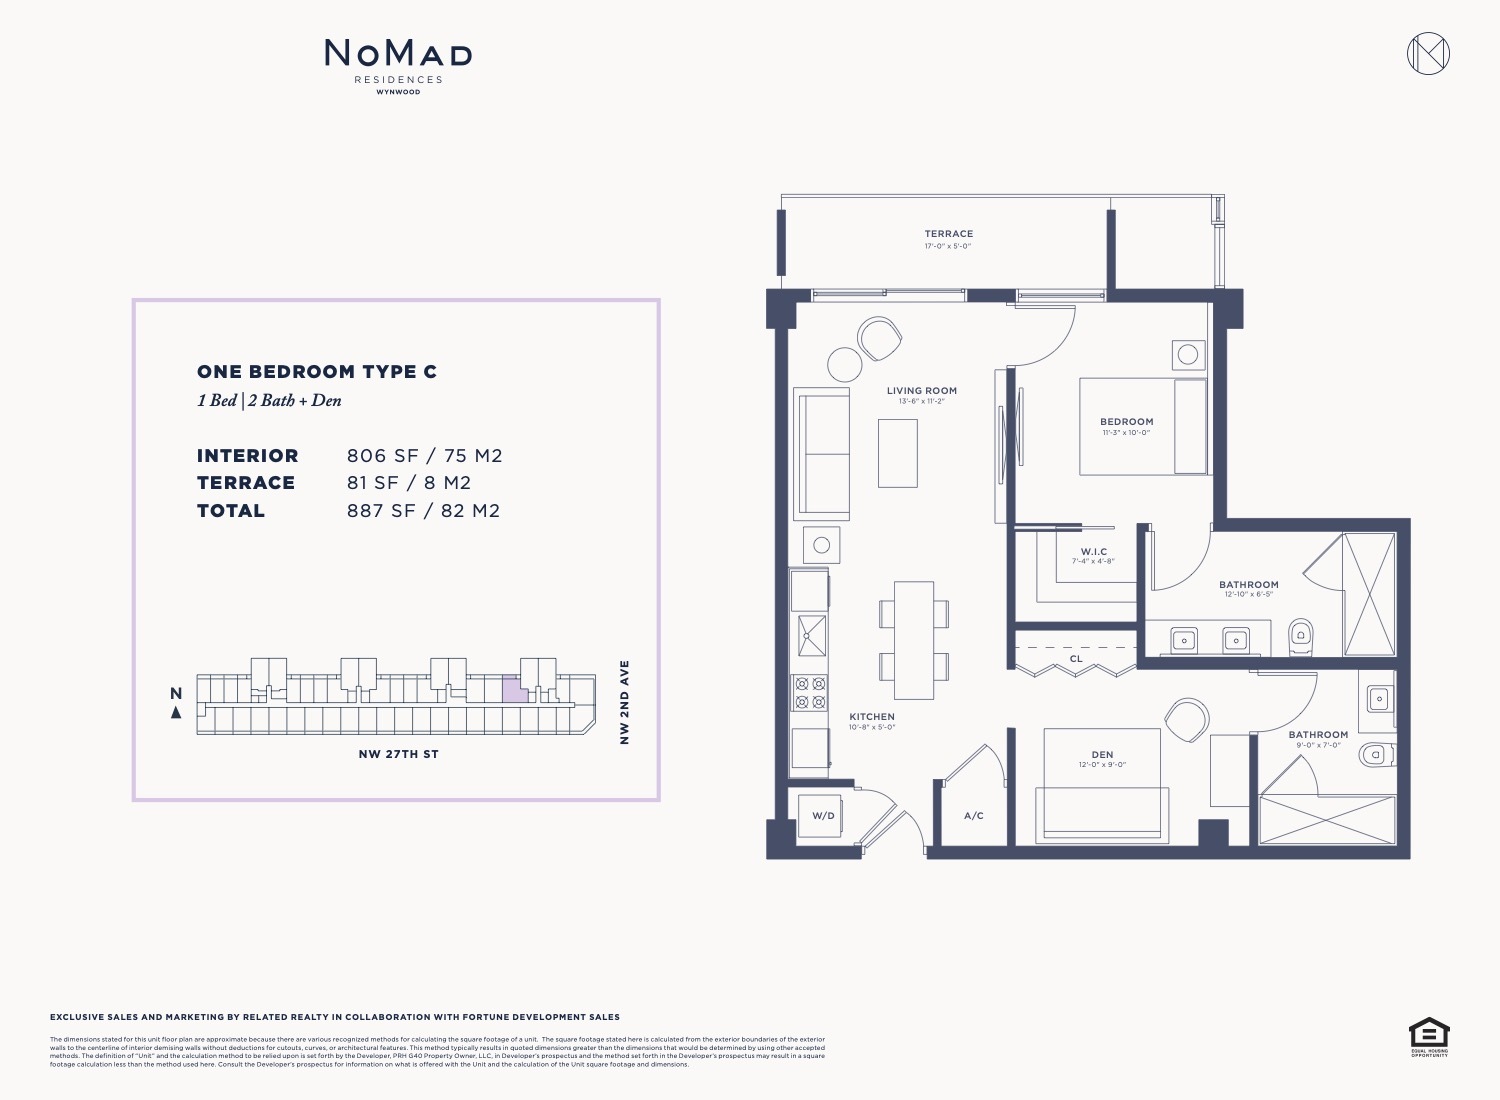 Floor Plan for Nomad Wynwood Floorplans, One Bedroom Type C